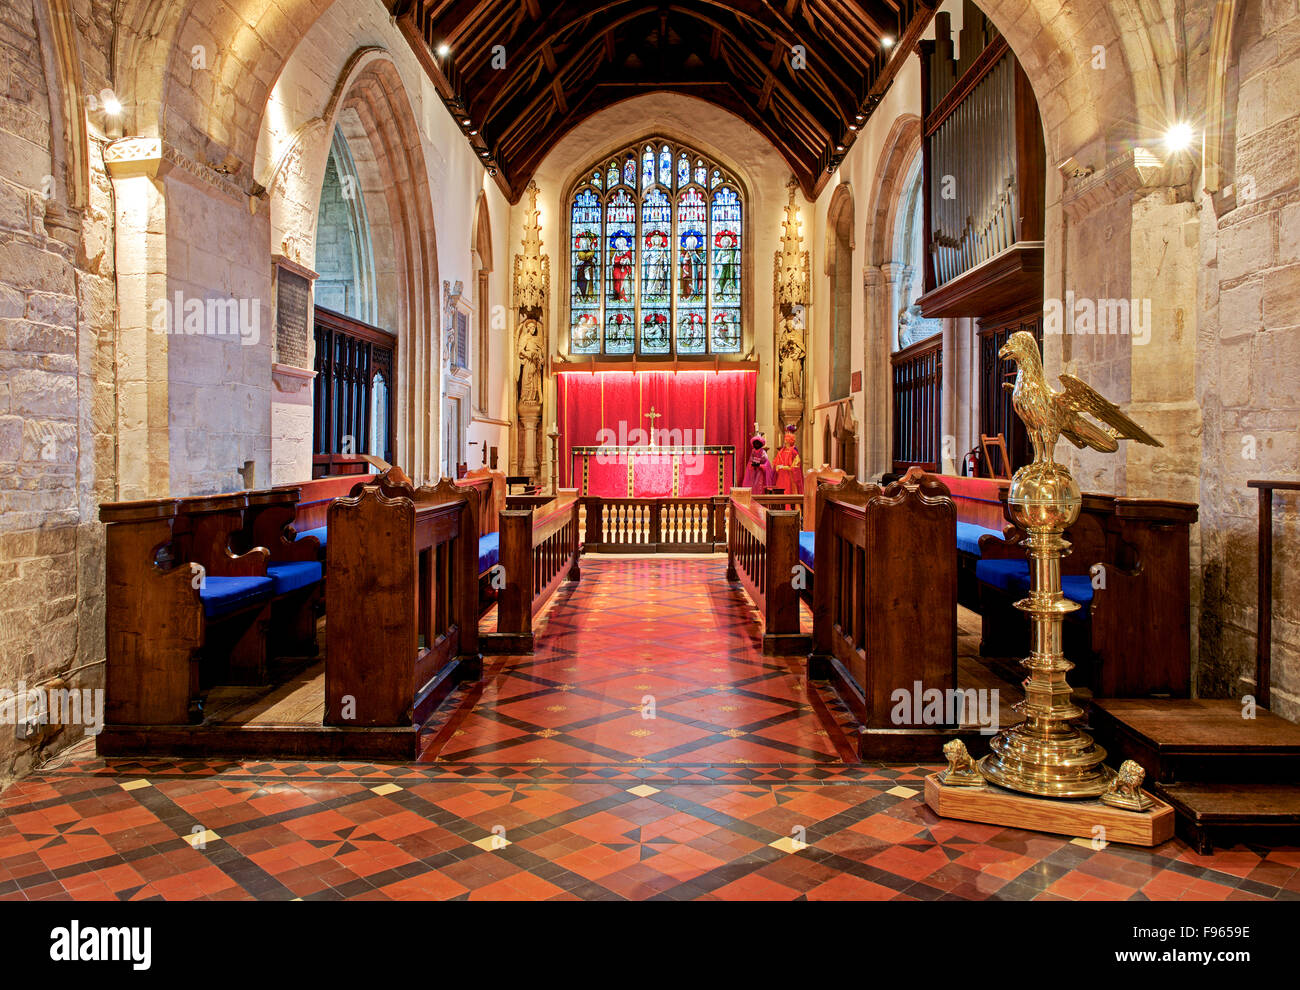 Interior of the Church of John the Baptist, Burford, Oxfordshire, England UK Stock Photo